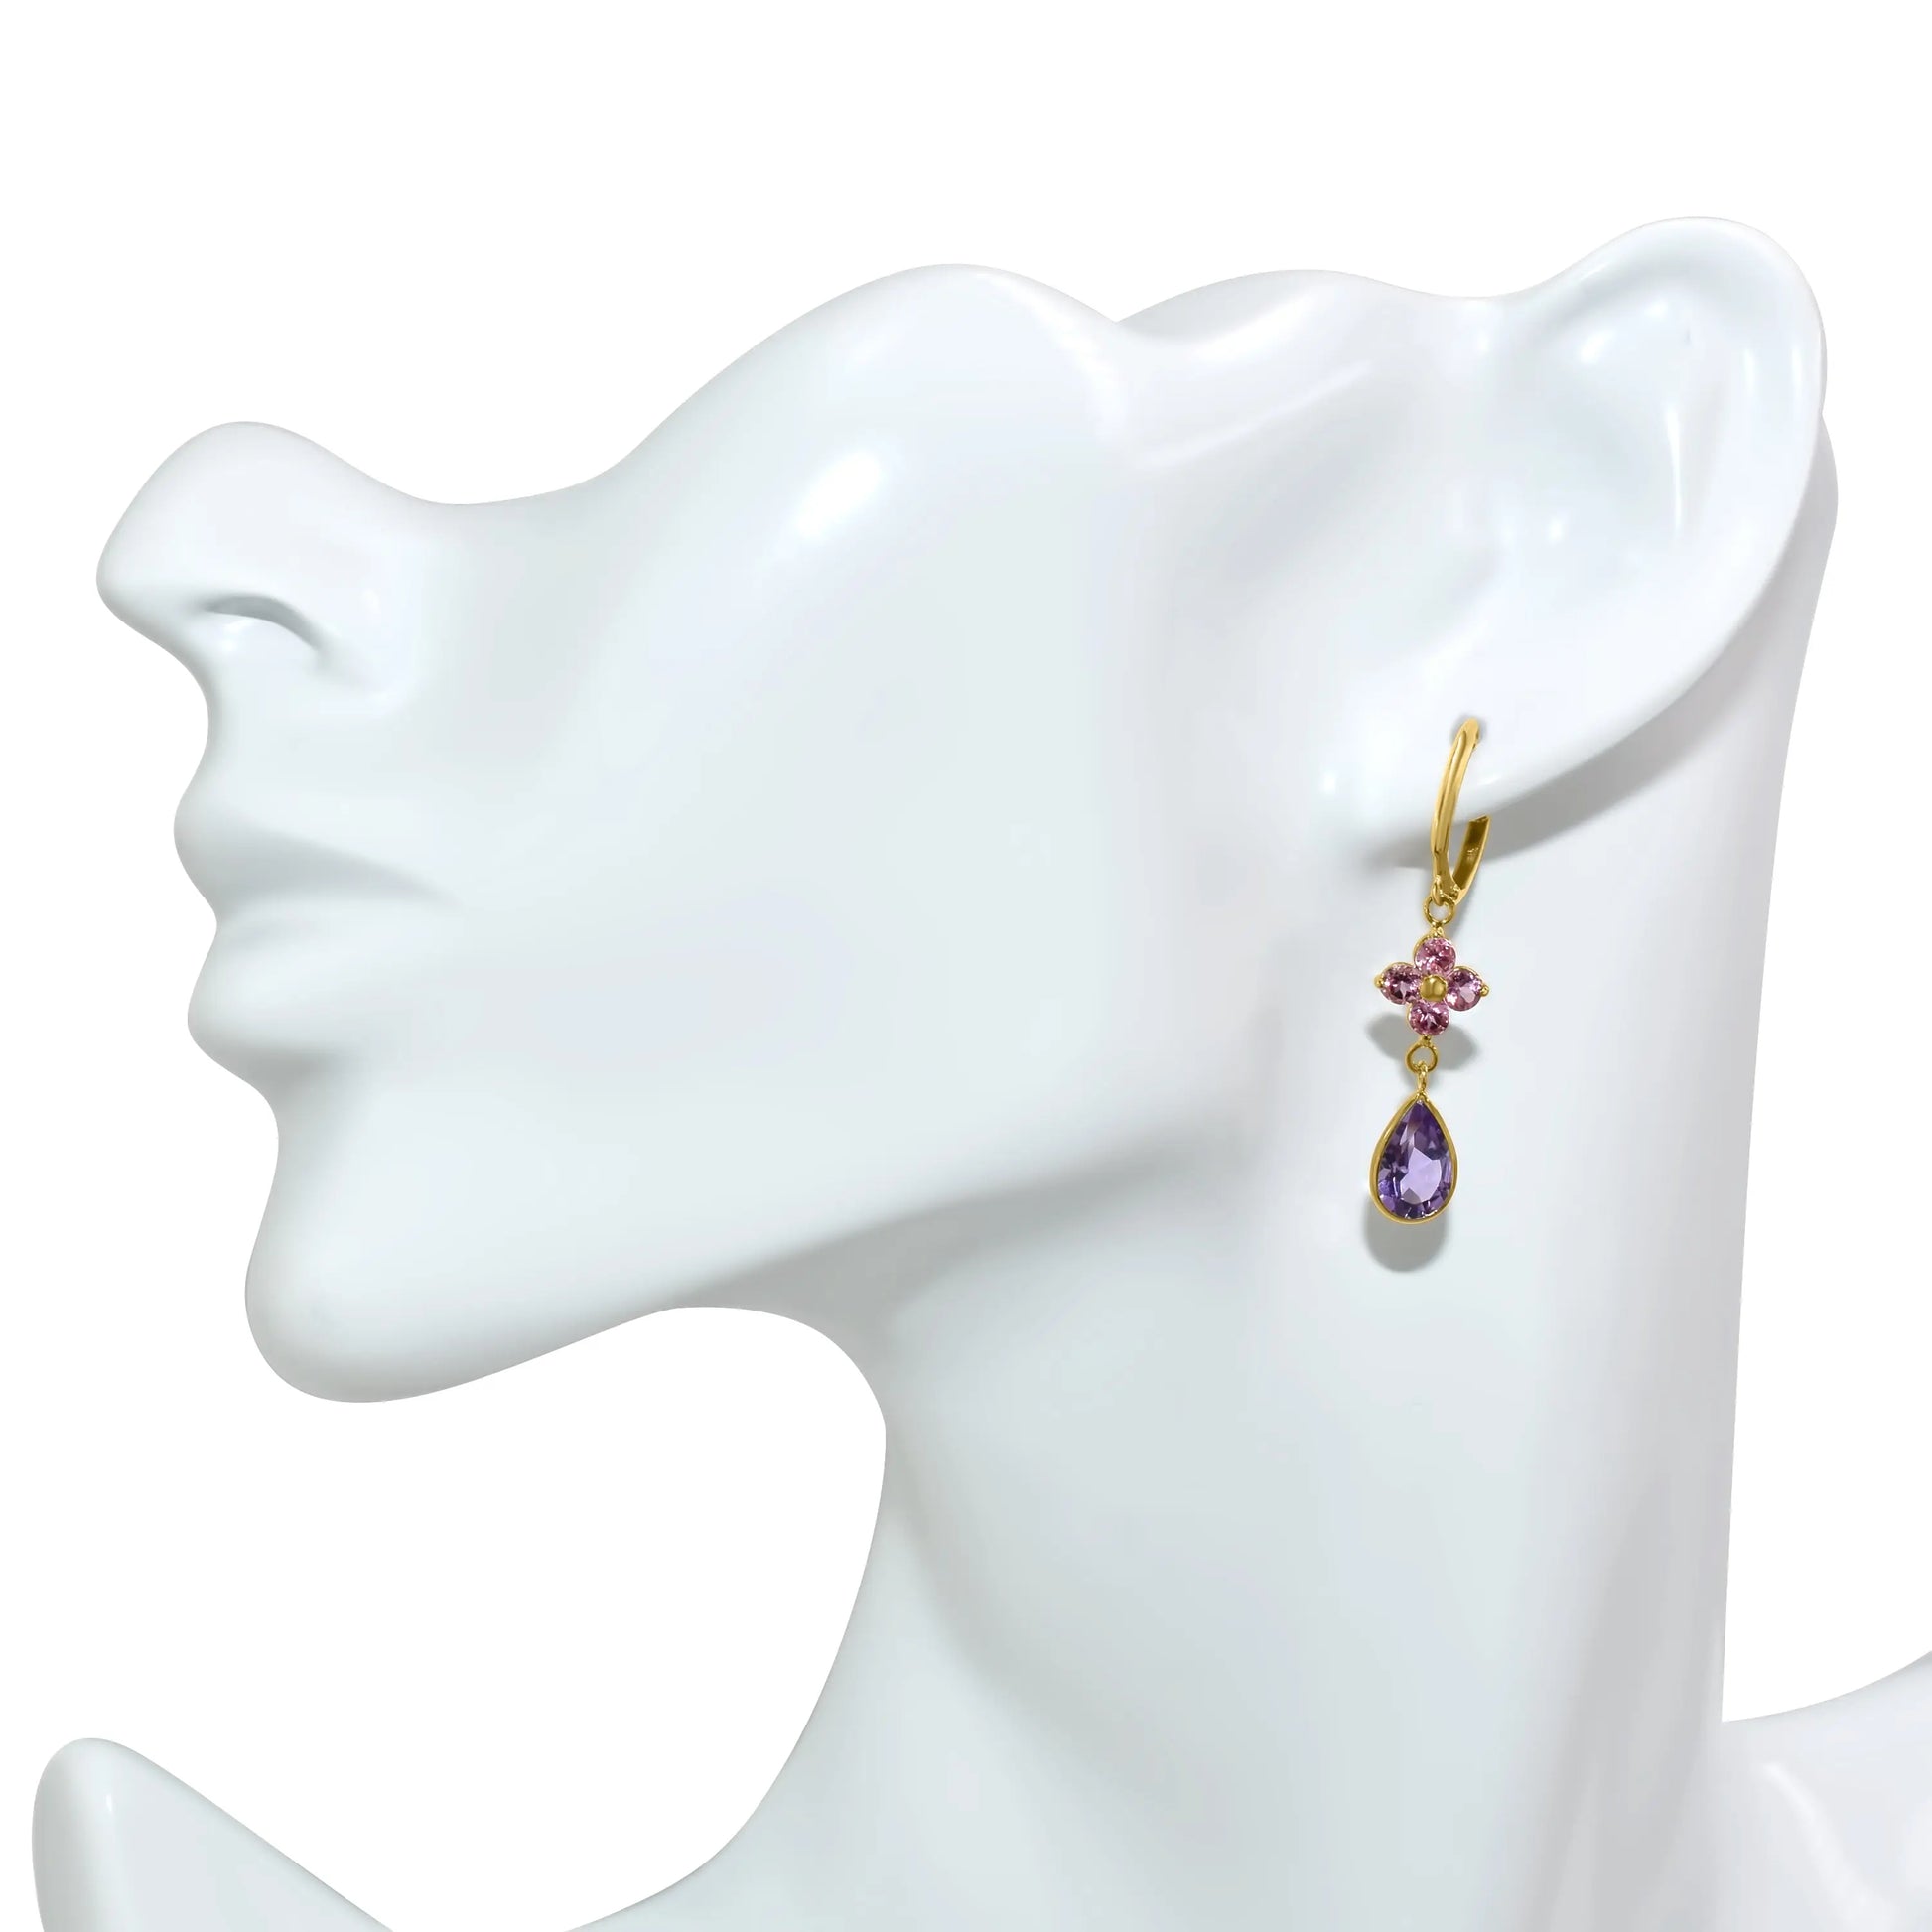 14k Yellow Gold Pink Sapphire and Amethyst Hoop Earring Jewelmak Shop